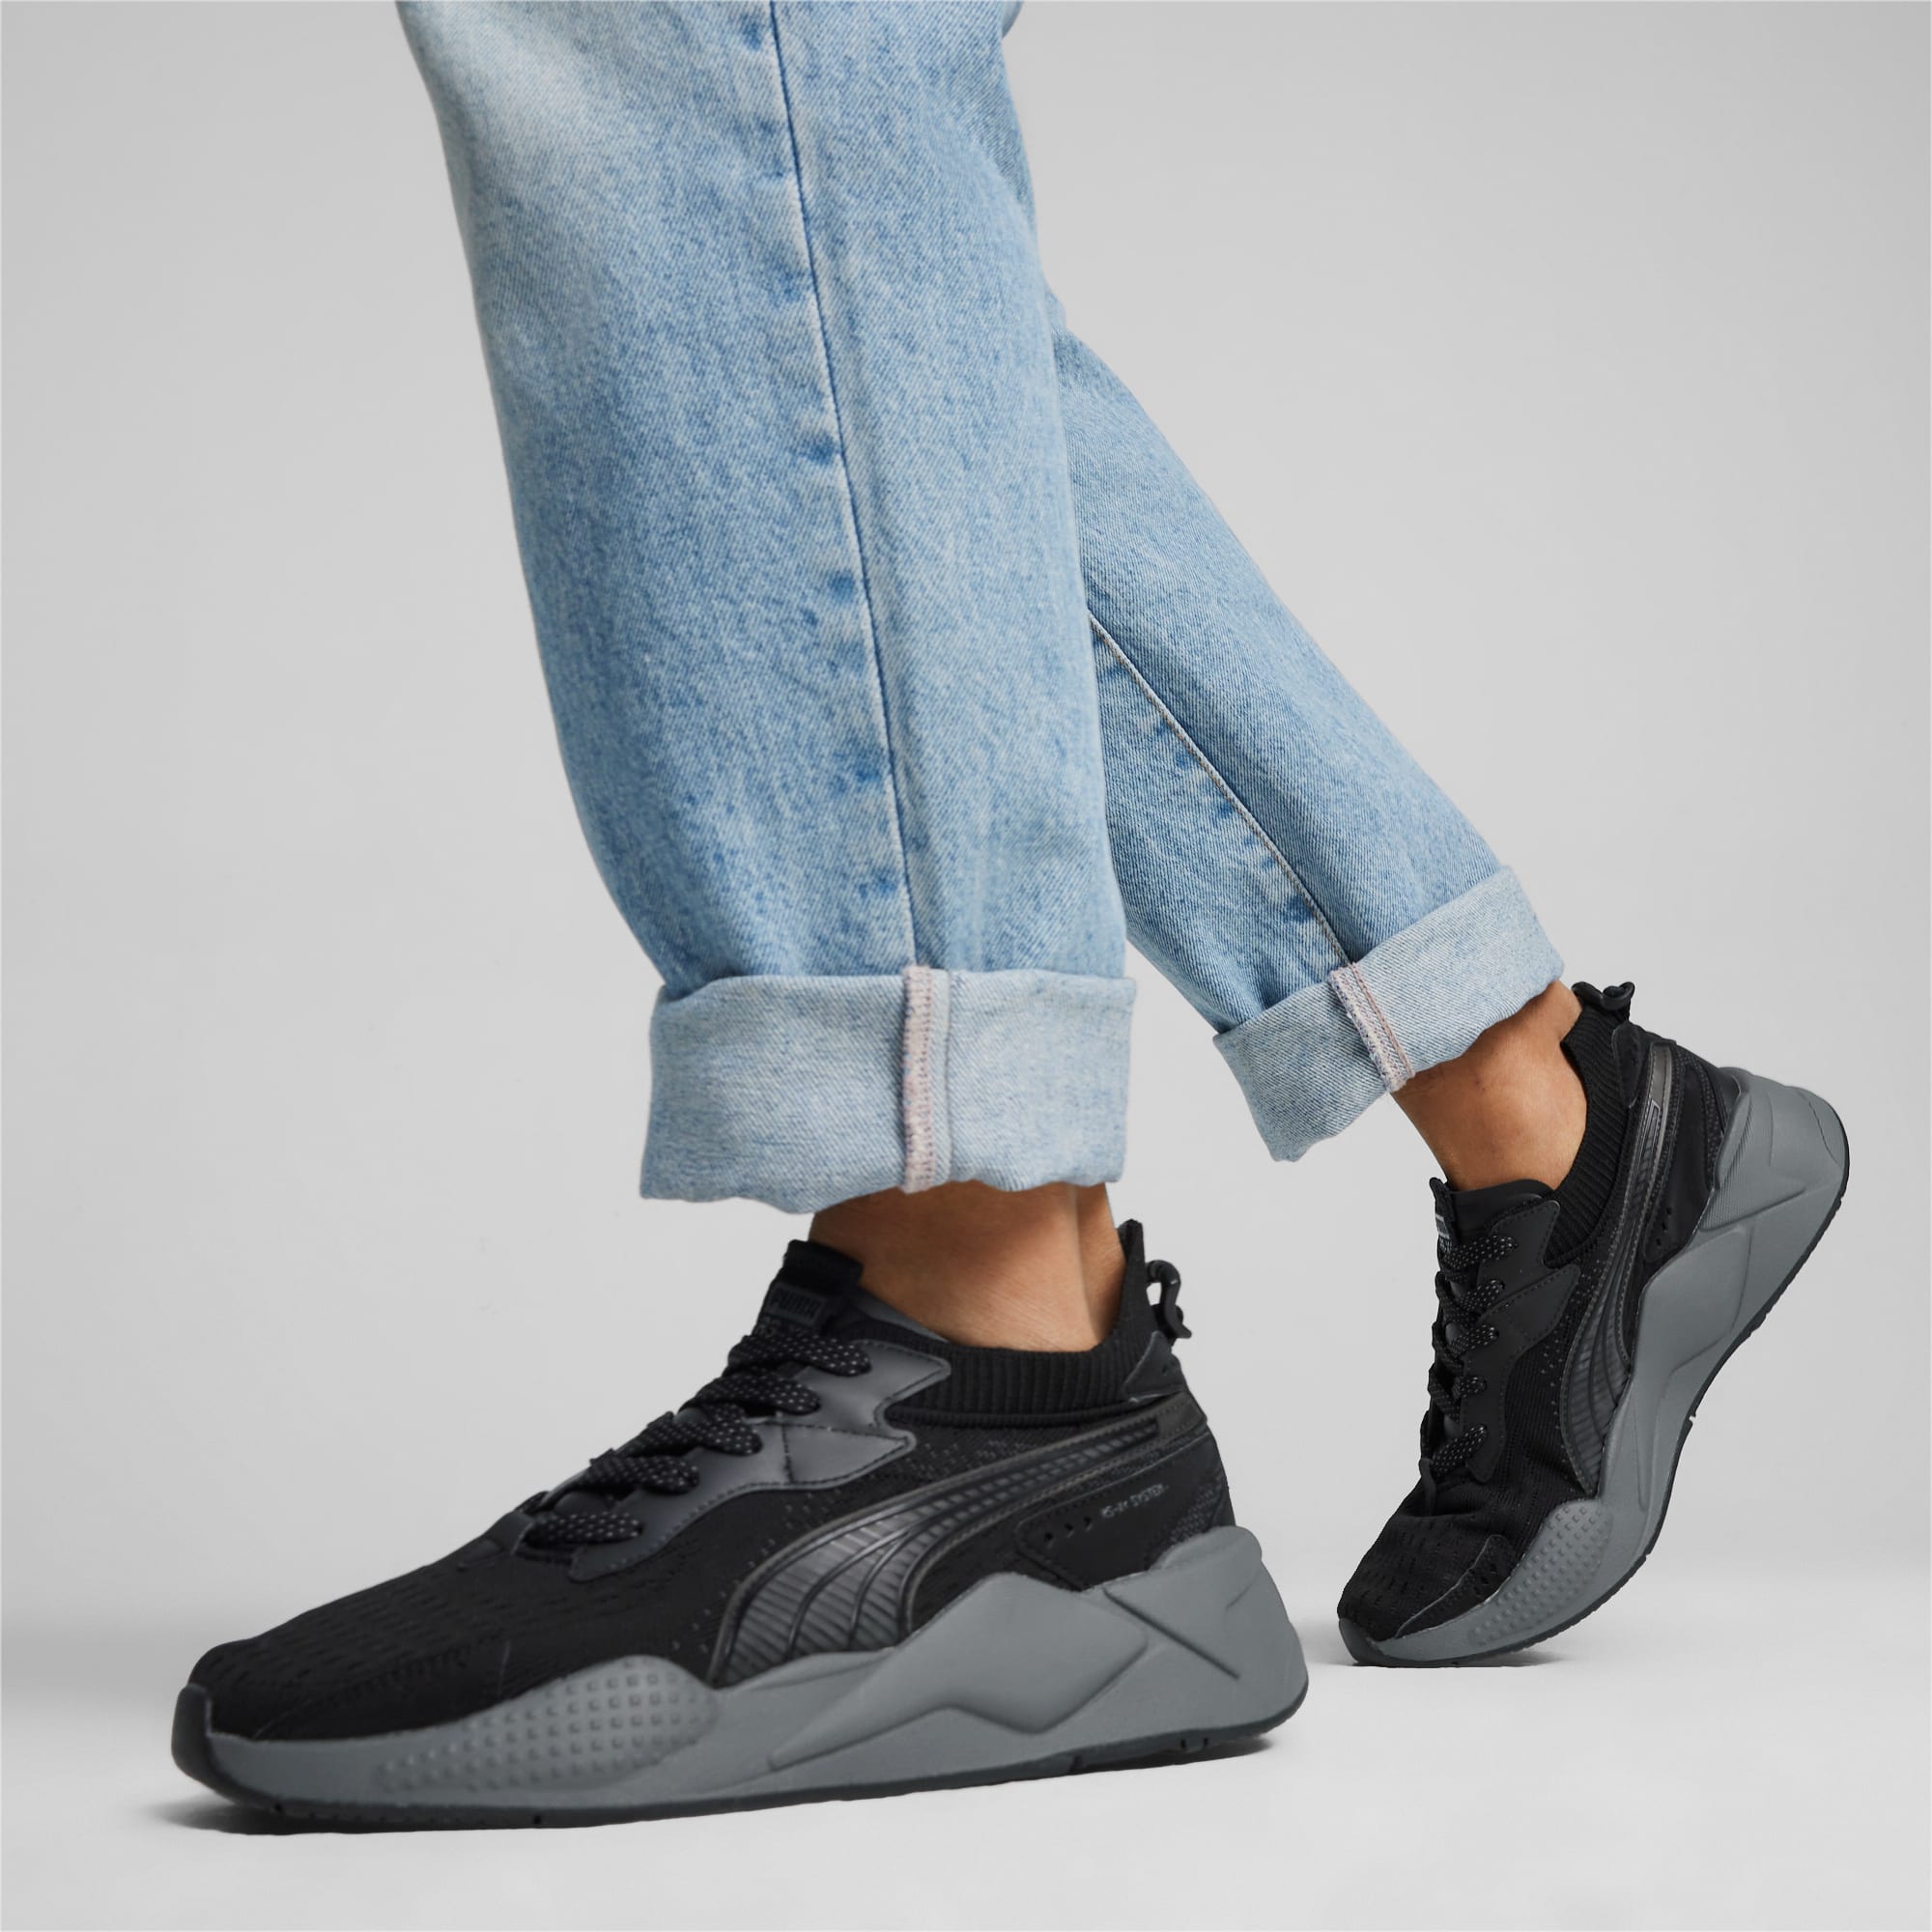 Women's PUMA Rs-Xk Remix Sneakers, Black/Flat Dark Grey, Size 35,5, Shoes